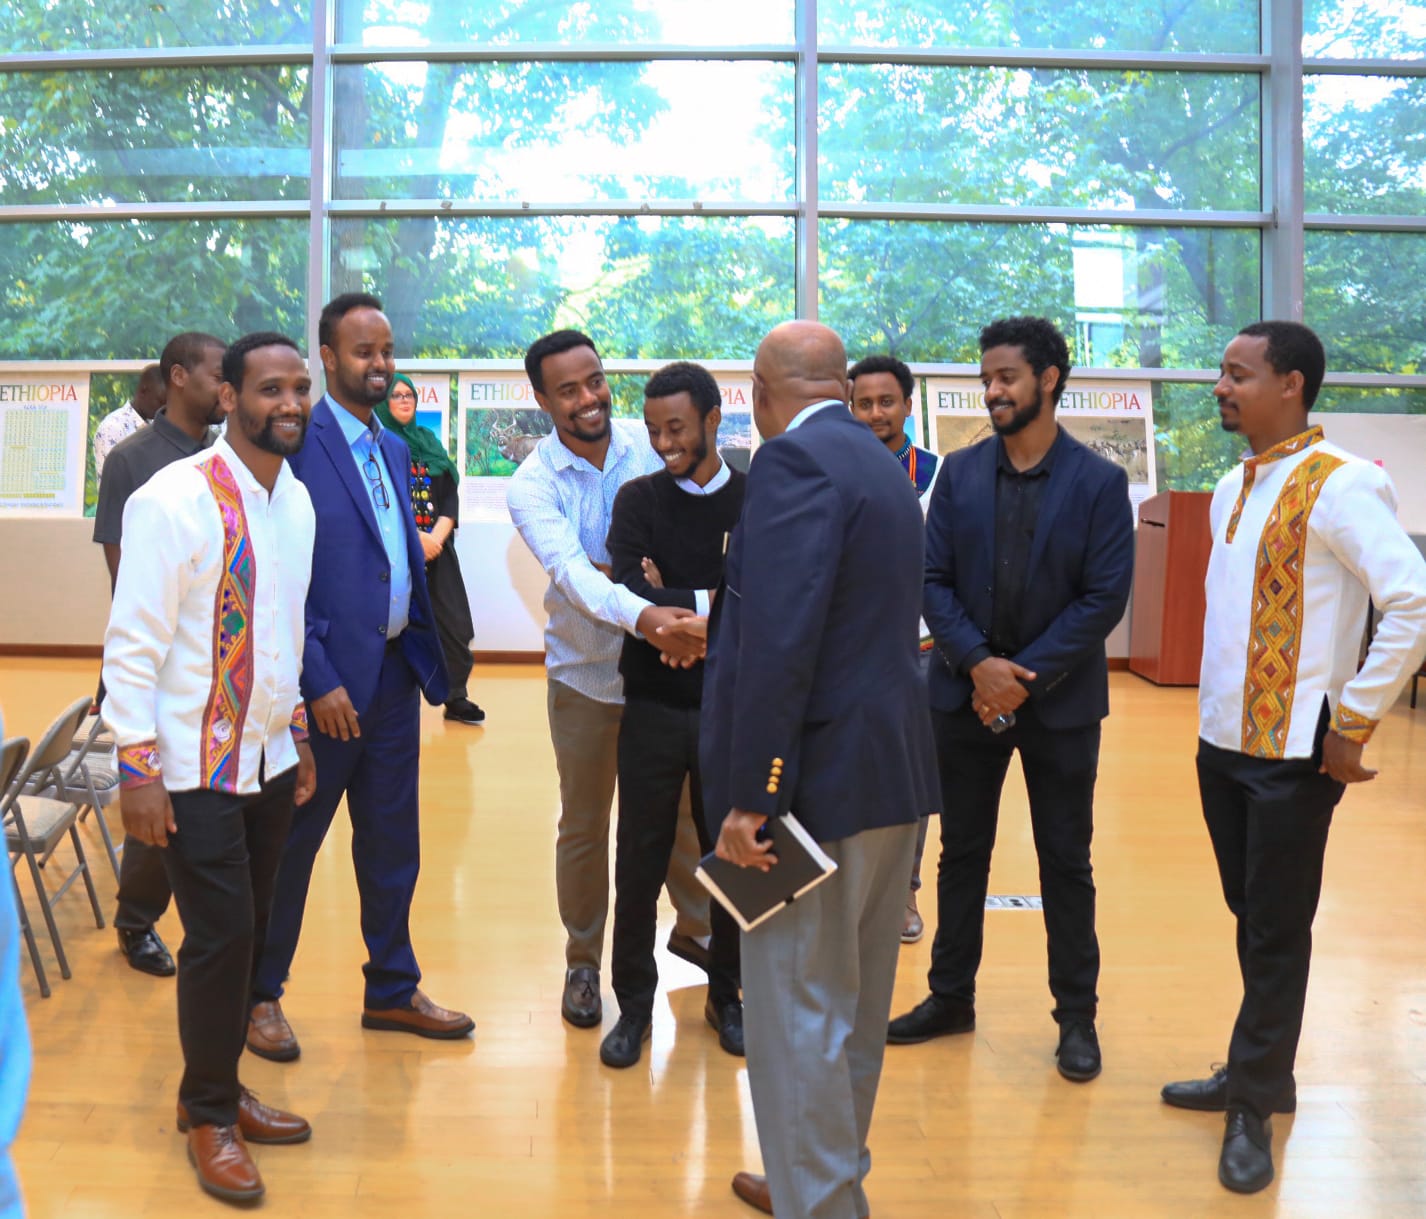 HE Ambassador Dr. Seleshi Bekele met with Ethiopian ‘Mandela Washington Fellowship’ participants